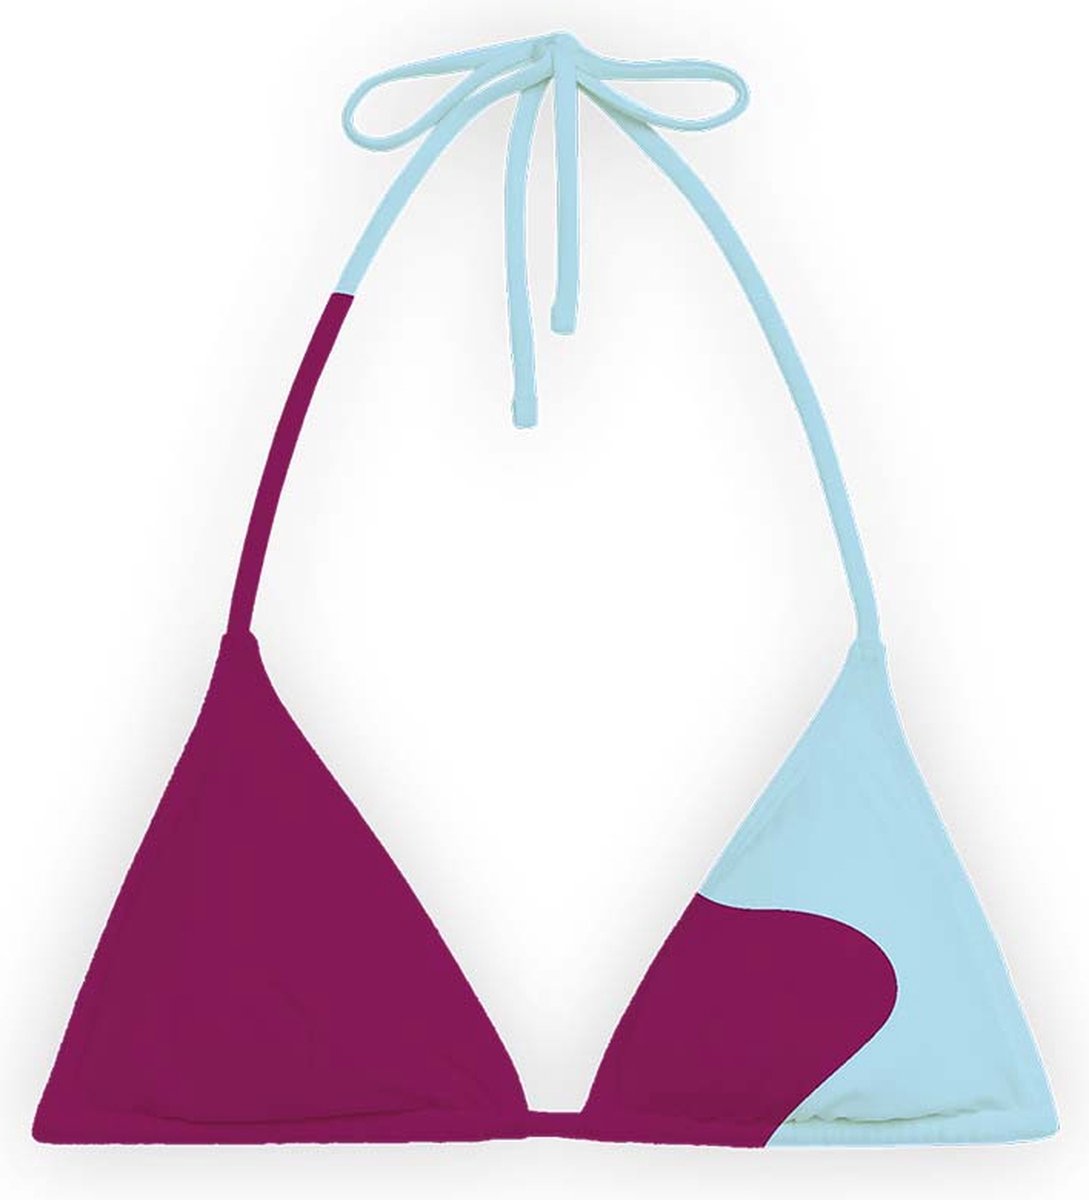 Sea'sons Official - Kleurveranderend - Triangle Bikini Top - Roze-Blauw - XS